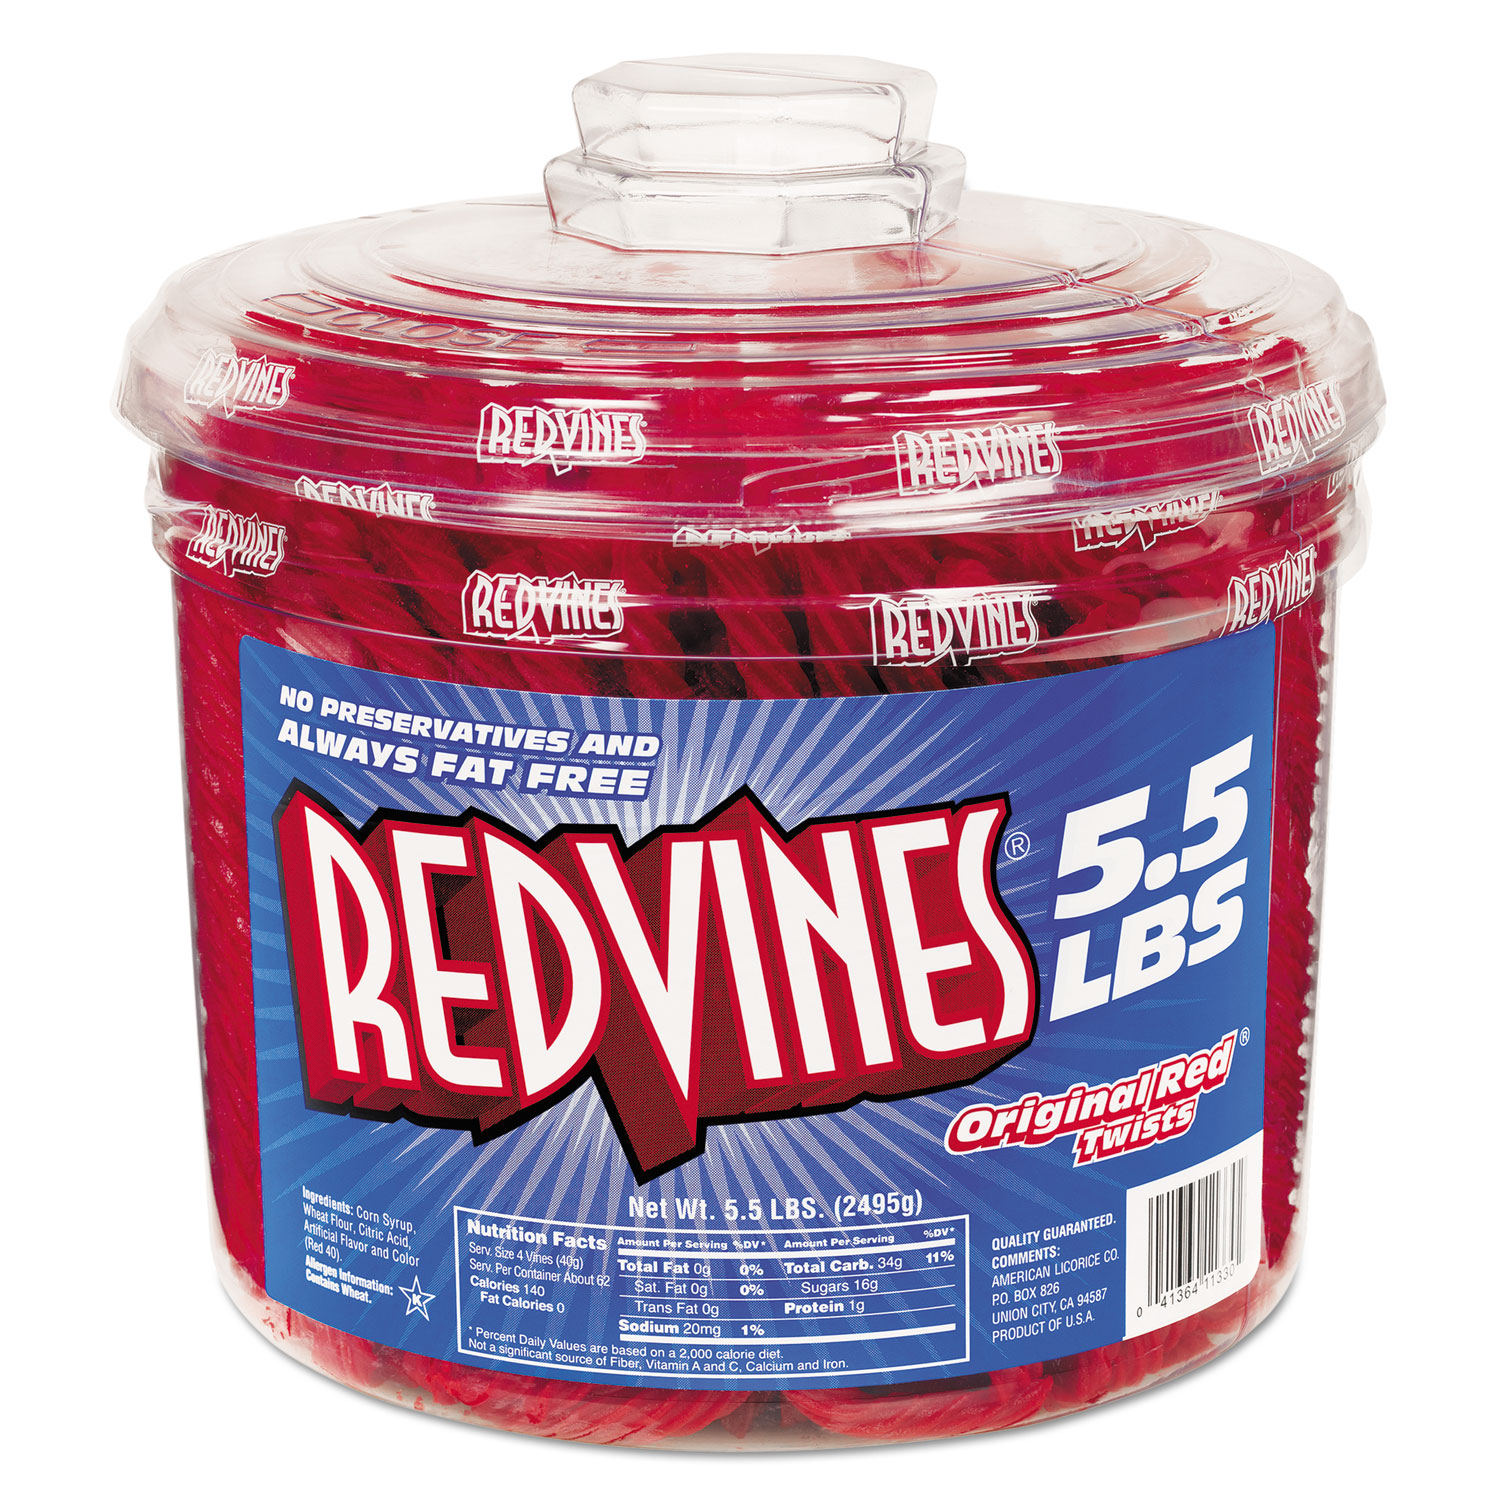 Redvines Original Red Twists, 5.5 lb Tub